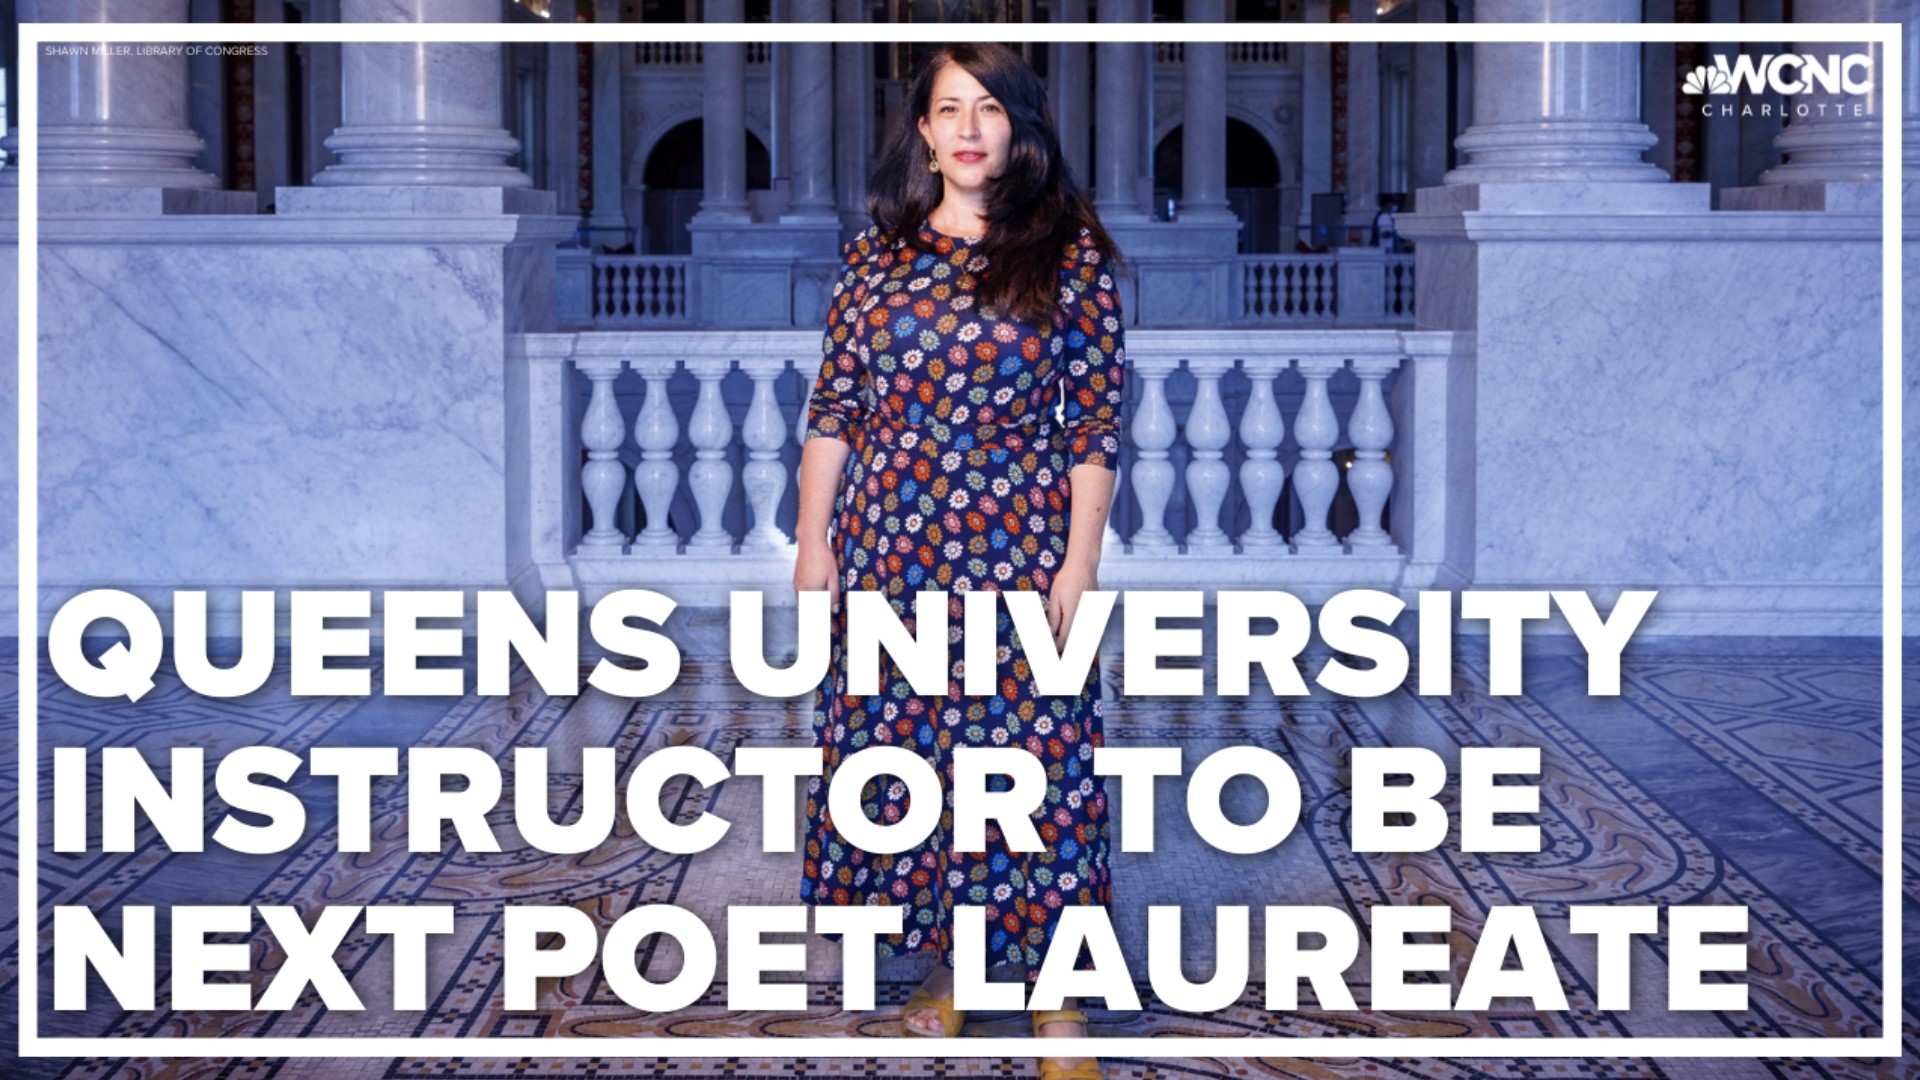 Ada Limón will become the next U.S. Poet Laureate.